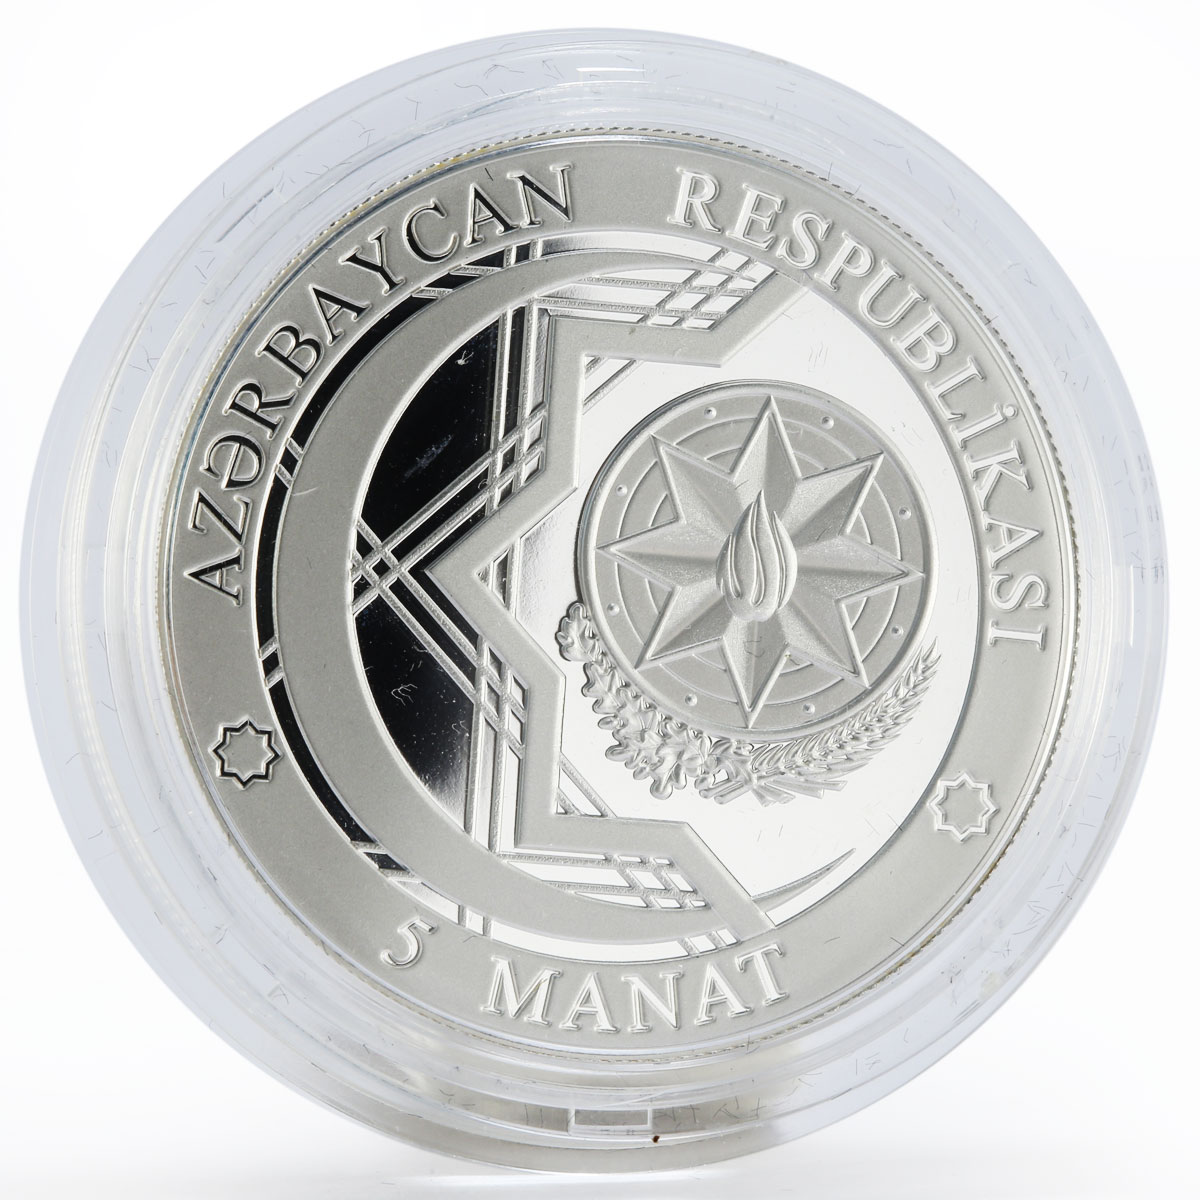 Azerbaijan 5 manat Baku-Tbilisi-Kars Railway proof silver coin 2015